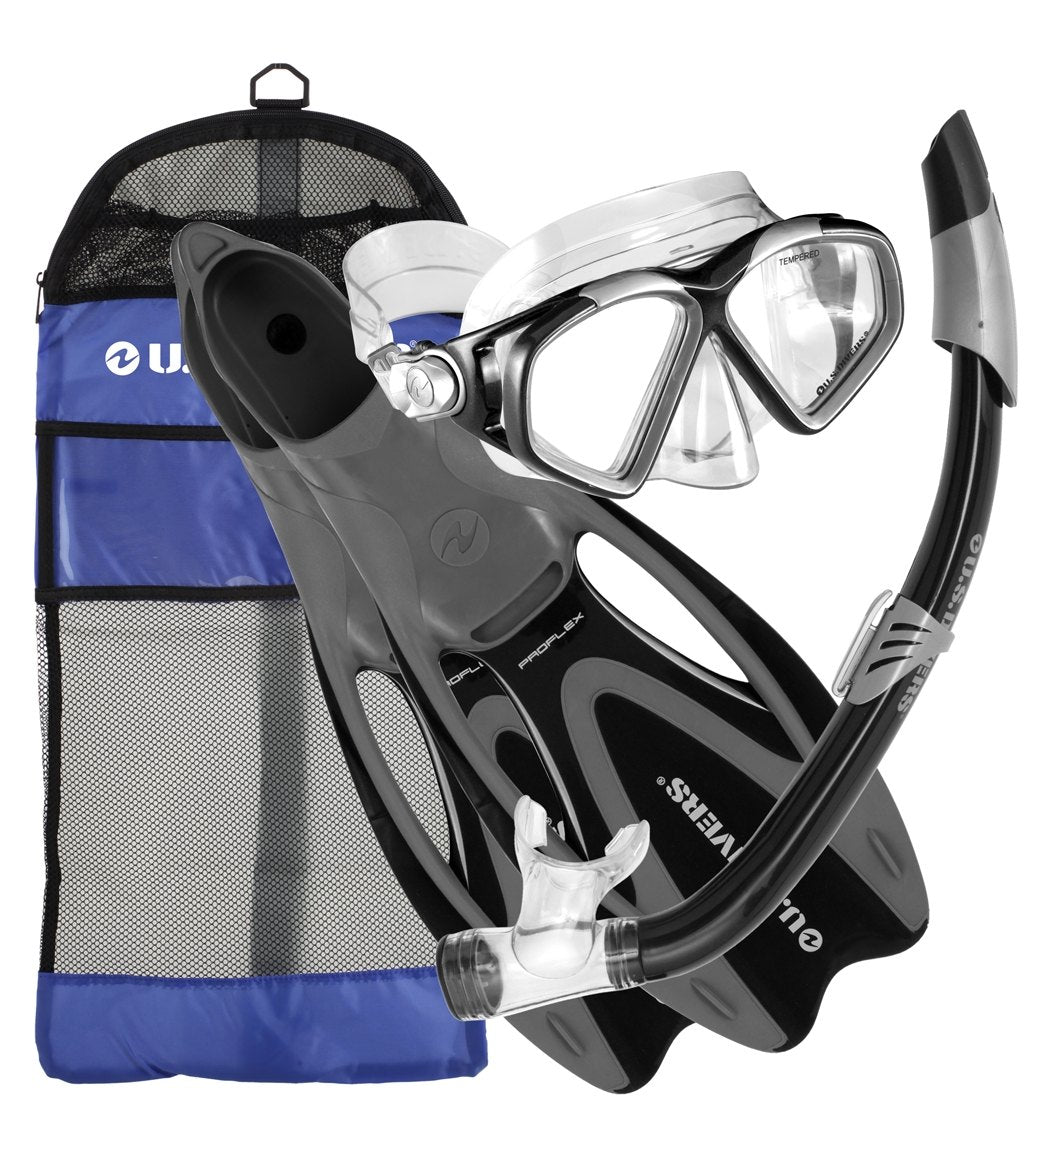 U.s. Divers Cozumel Mask / Seabreeze Snorkel Proflex Fins Gear Bag Set - Black Medium Plastic/Rubber/Silicone - Swimoutlet.com